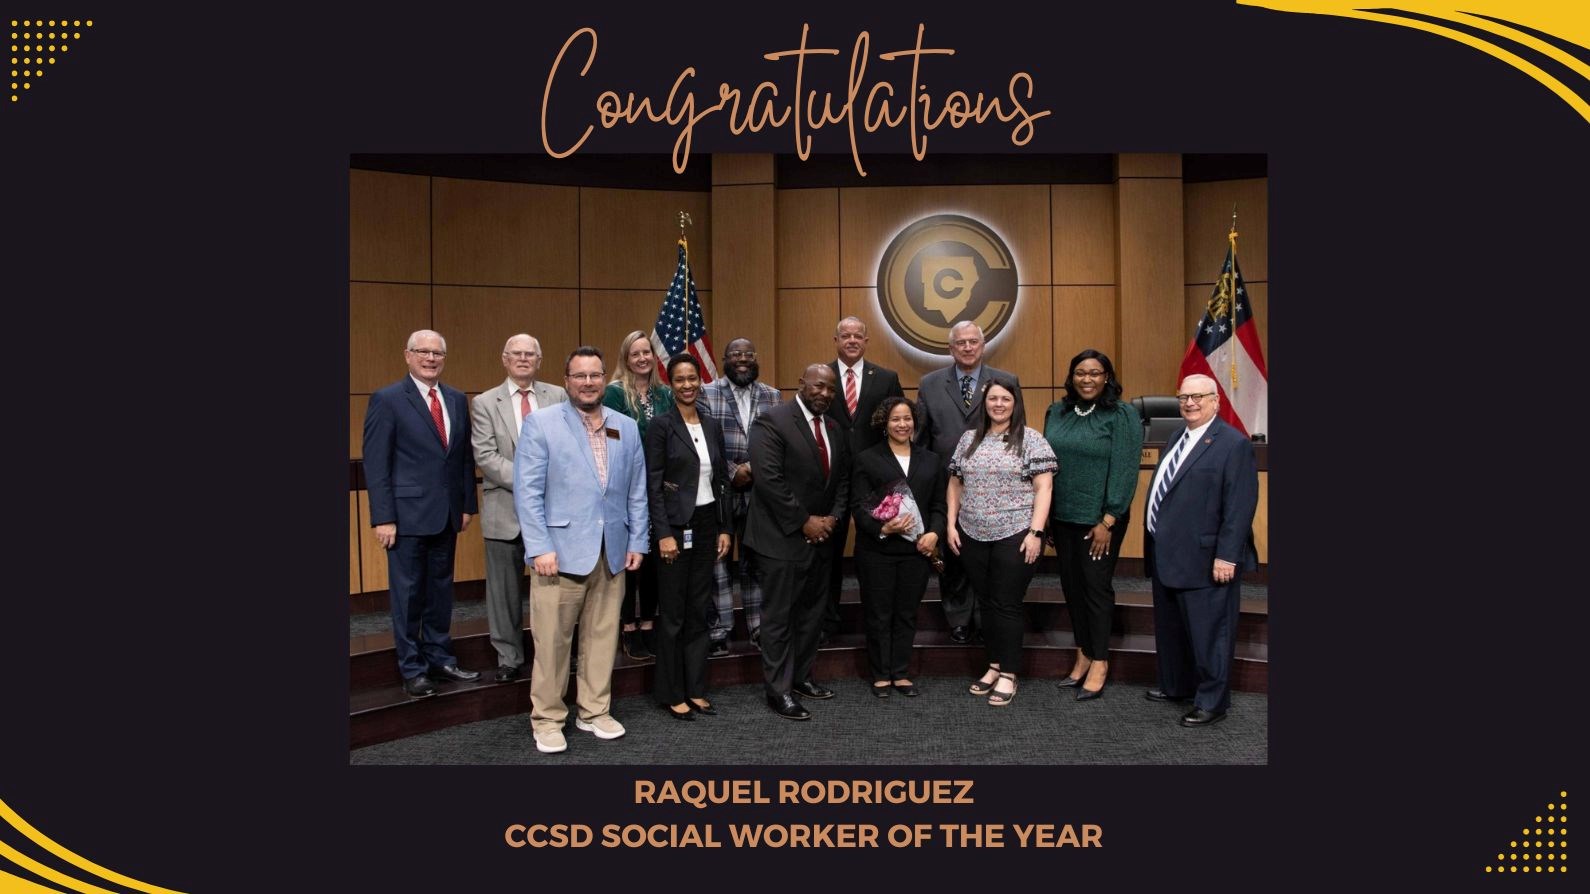 congratulations raquel rodriguez ccsd social worker of the year